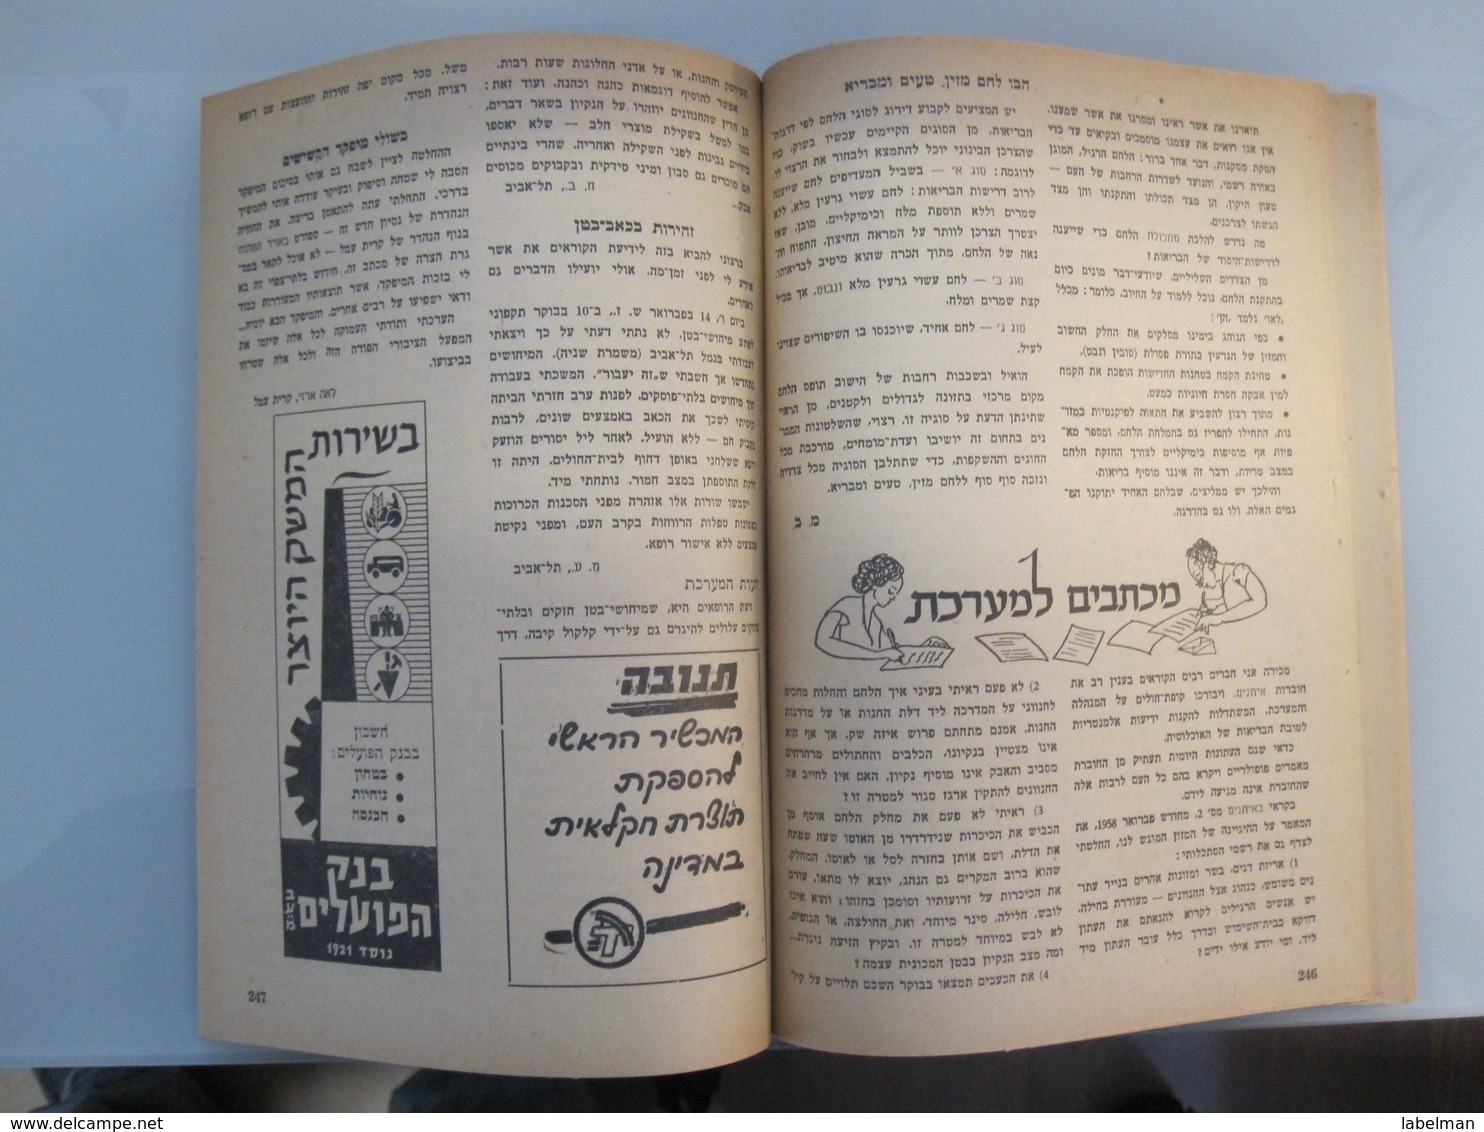 ISRAEL HOTEL MOTEL INN GUEST REST HOUSE KUPAT HOLIM 1954 NEWSPAPER ADVERTISING MAGAZINE - Advertising